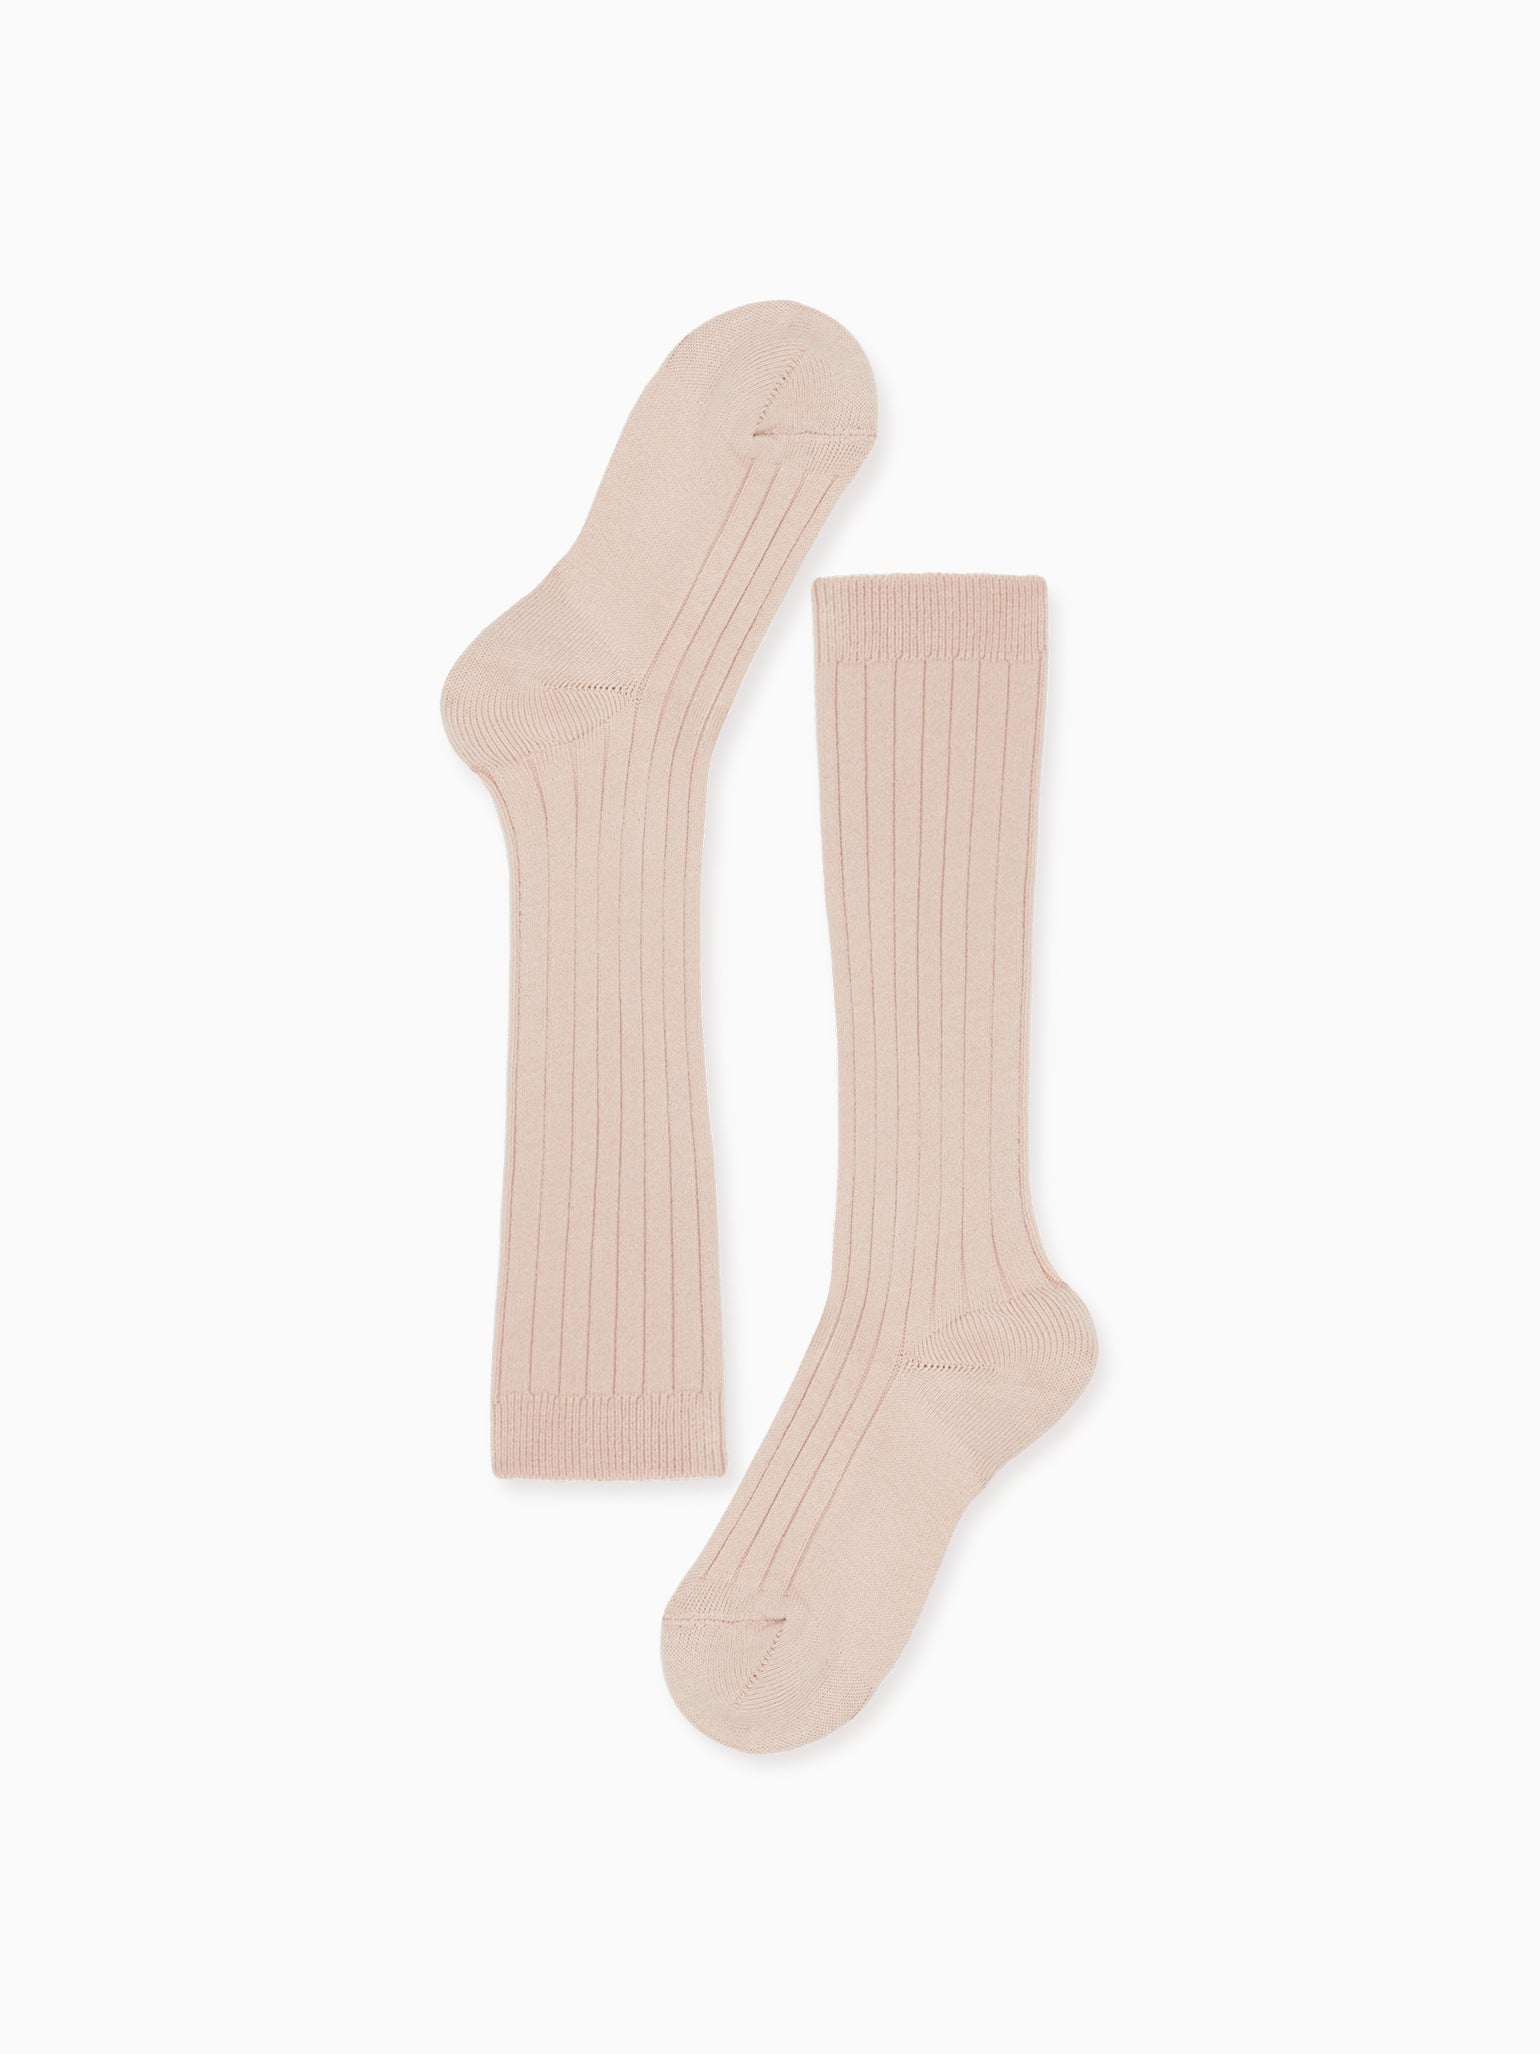 Pale Pink Ribbed Knee High Girl Socks